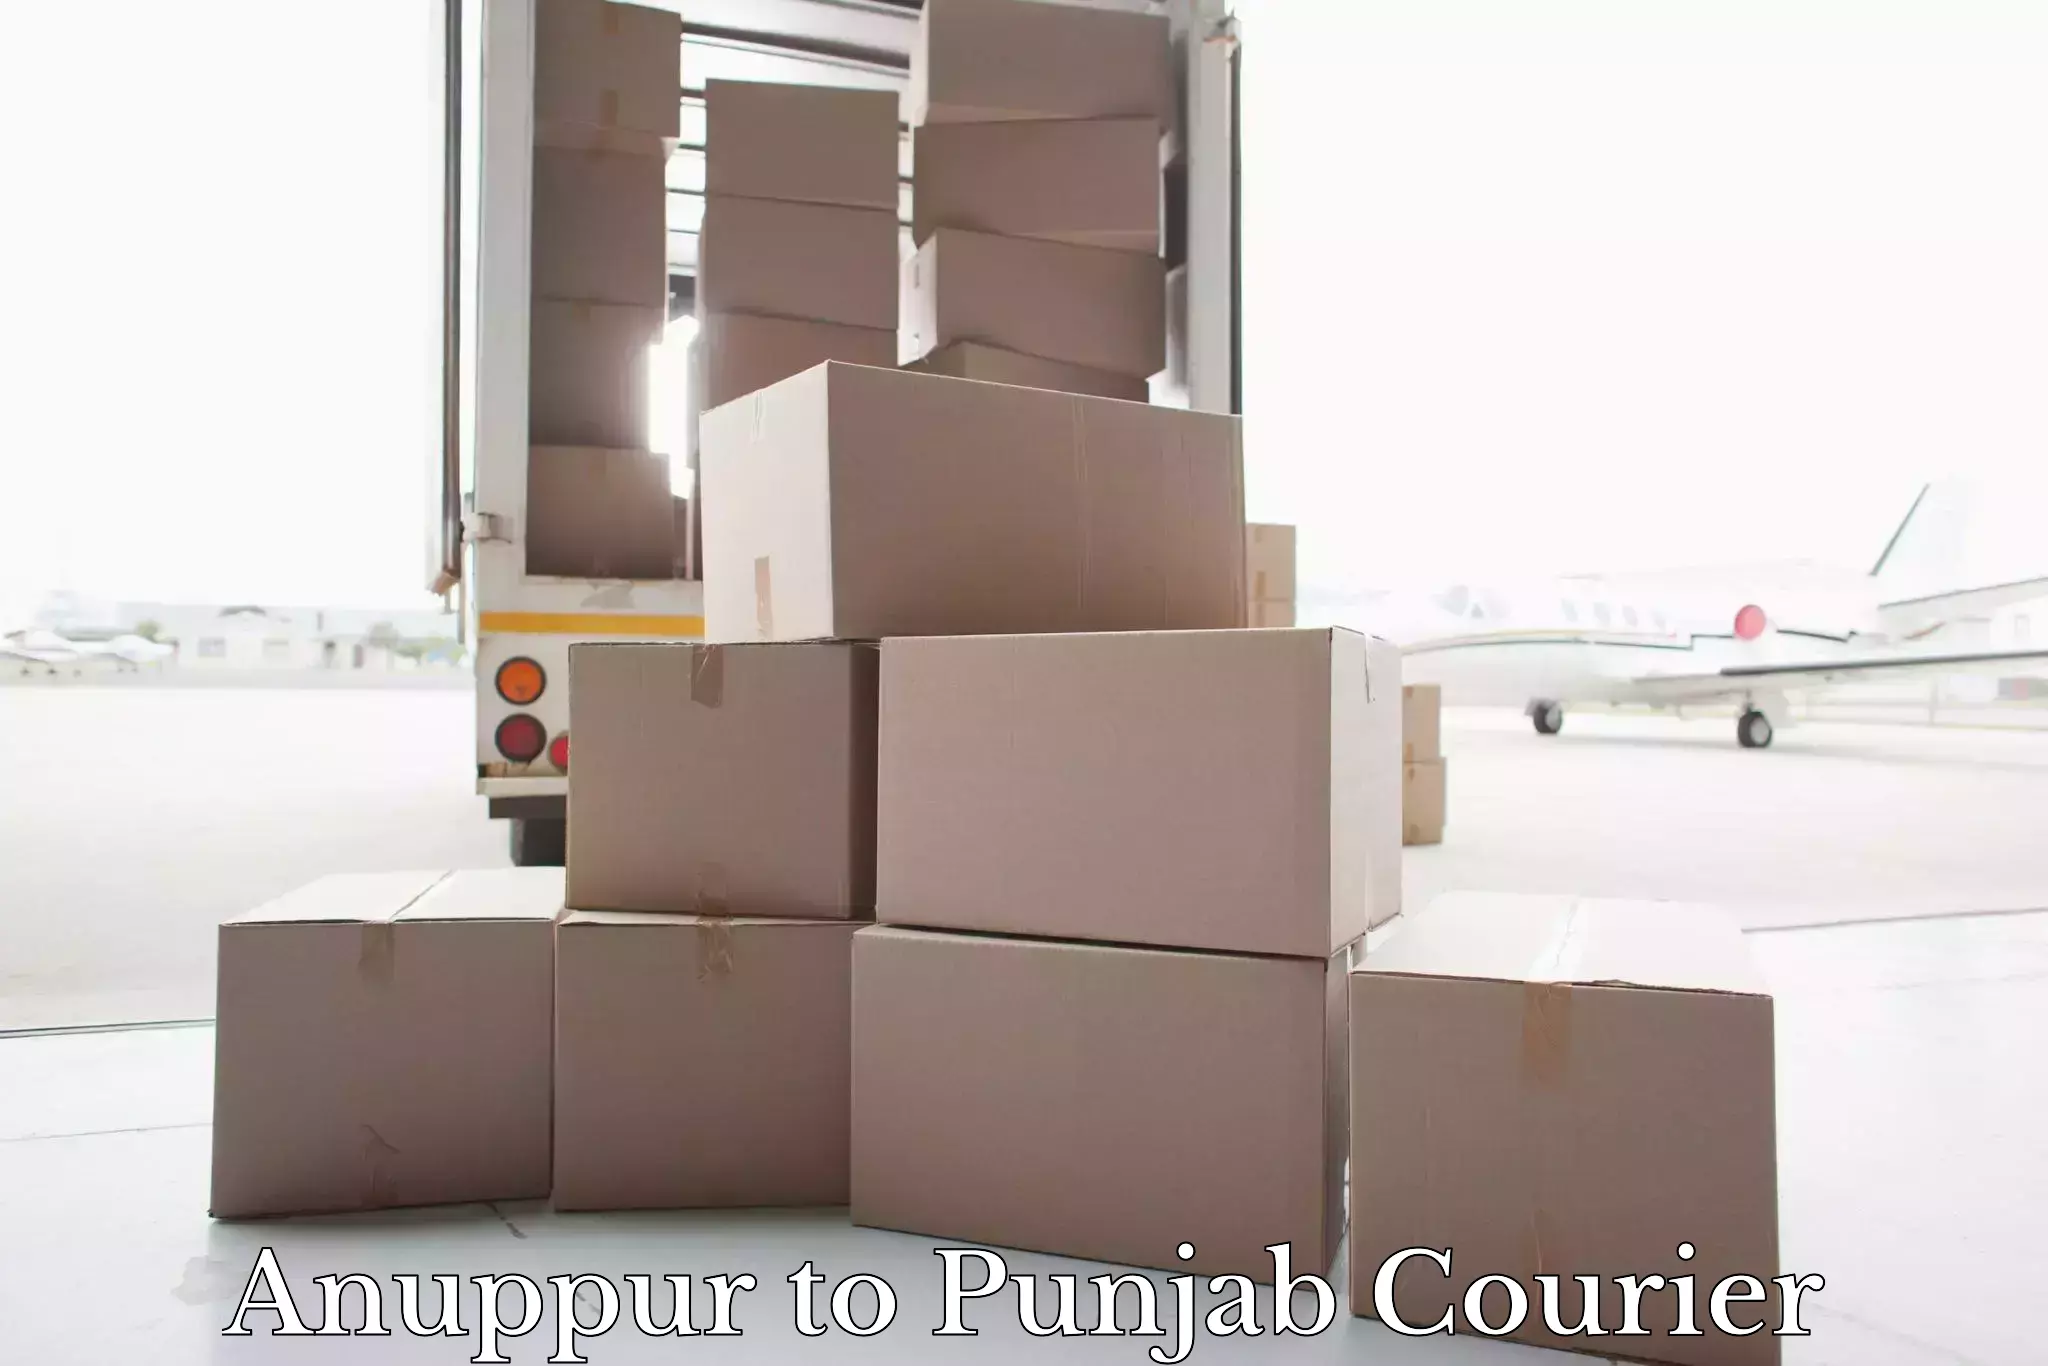 Doorstep luggage collection Anuppur to Punjab